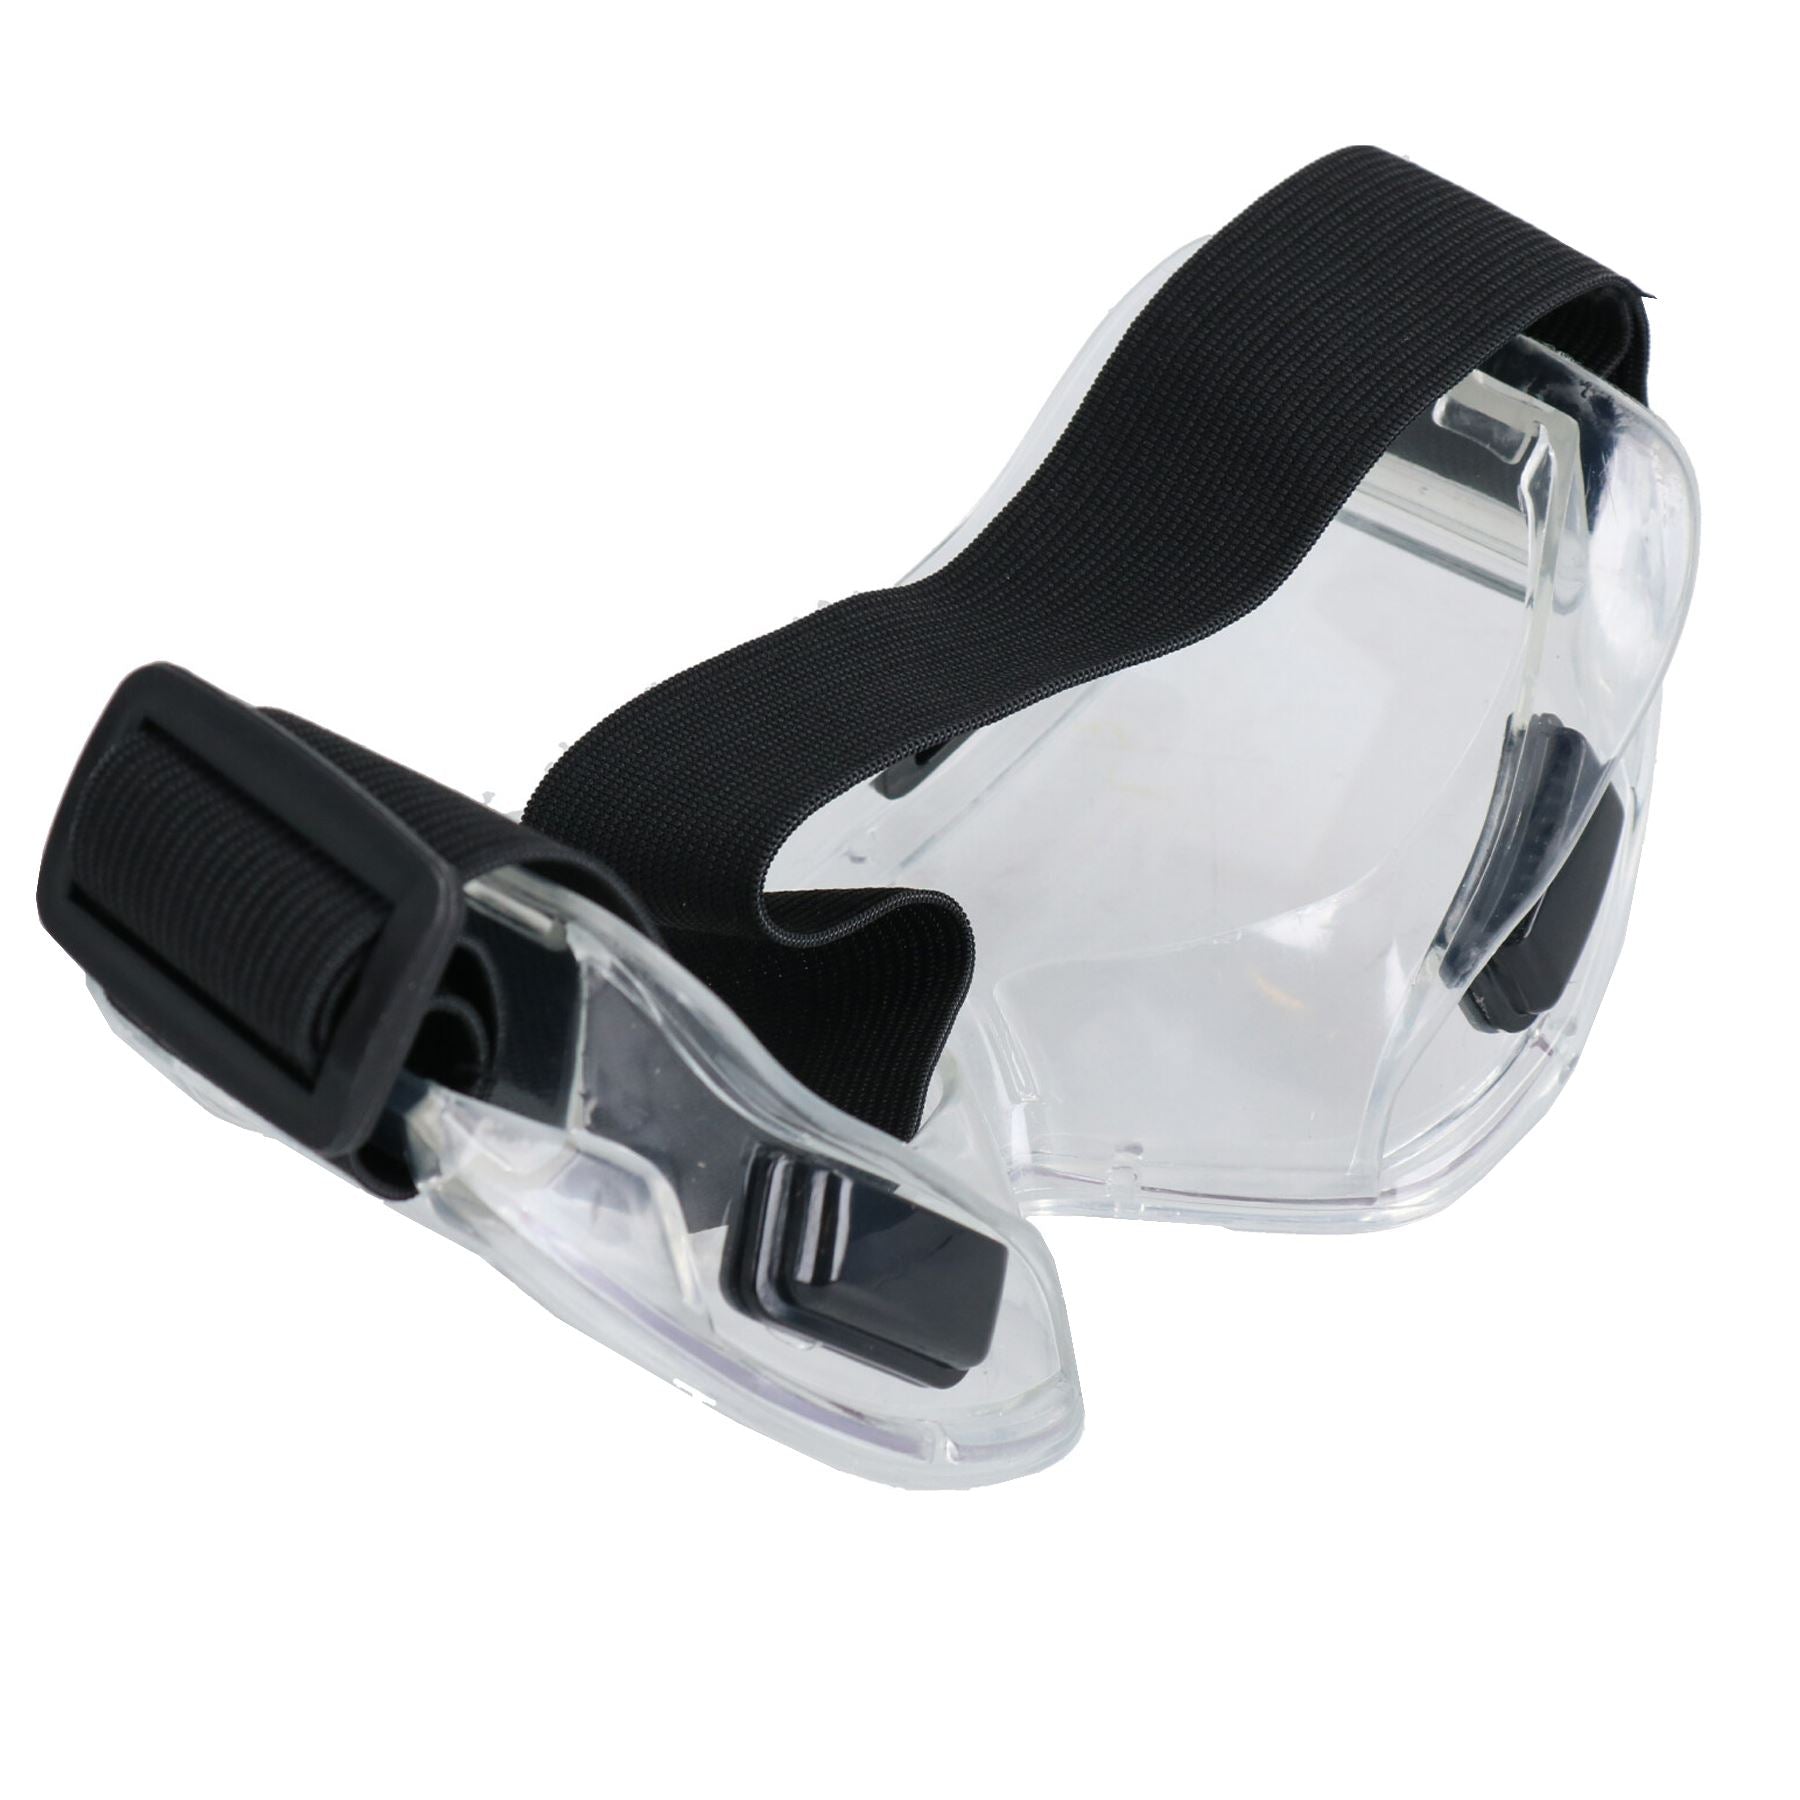 Premium Safety Goggles Glasses Eye Protection Sealed Design Flexible Frame